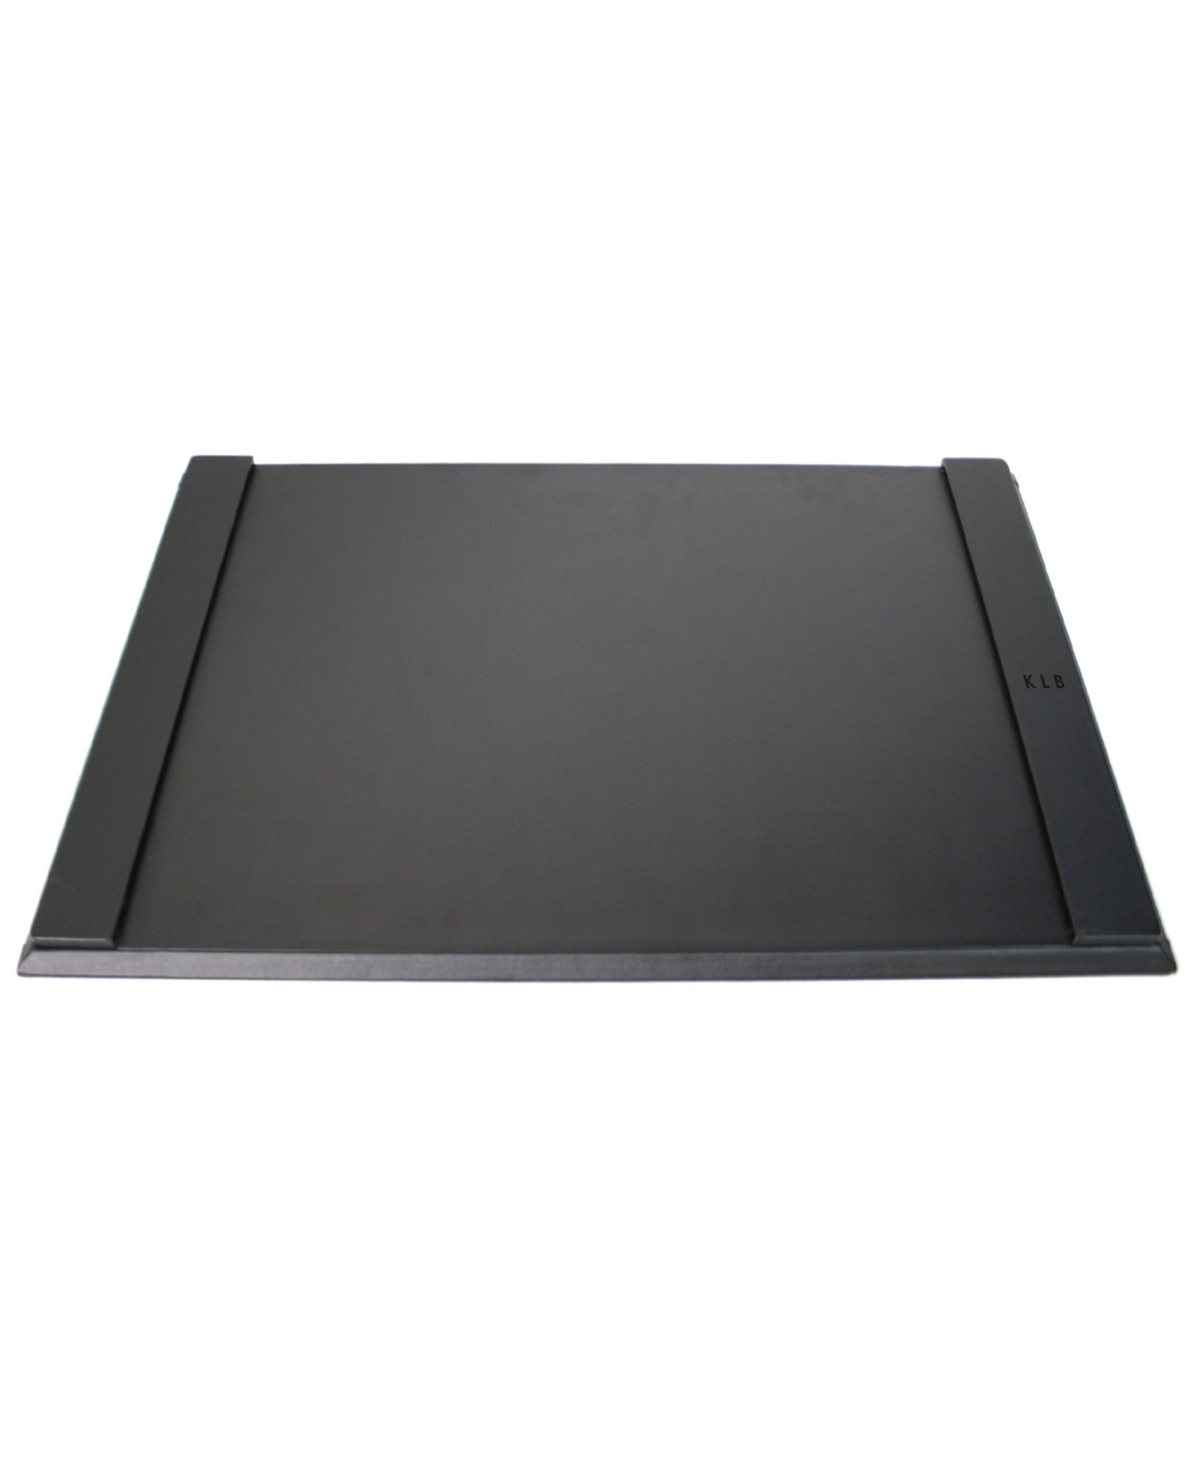 27" x 18" Desk Pad Blotter - Black